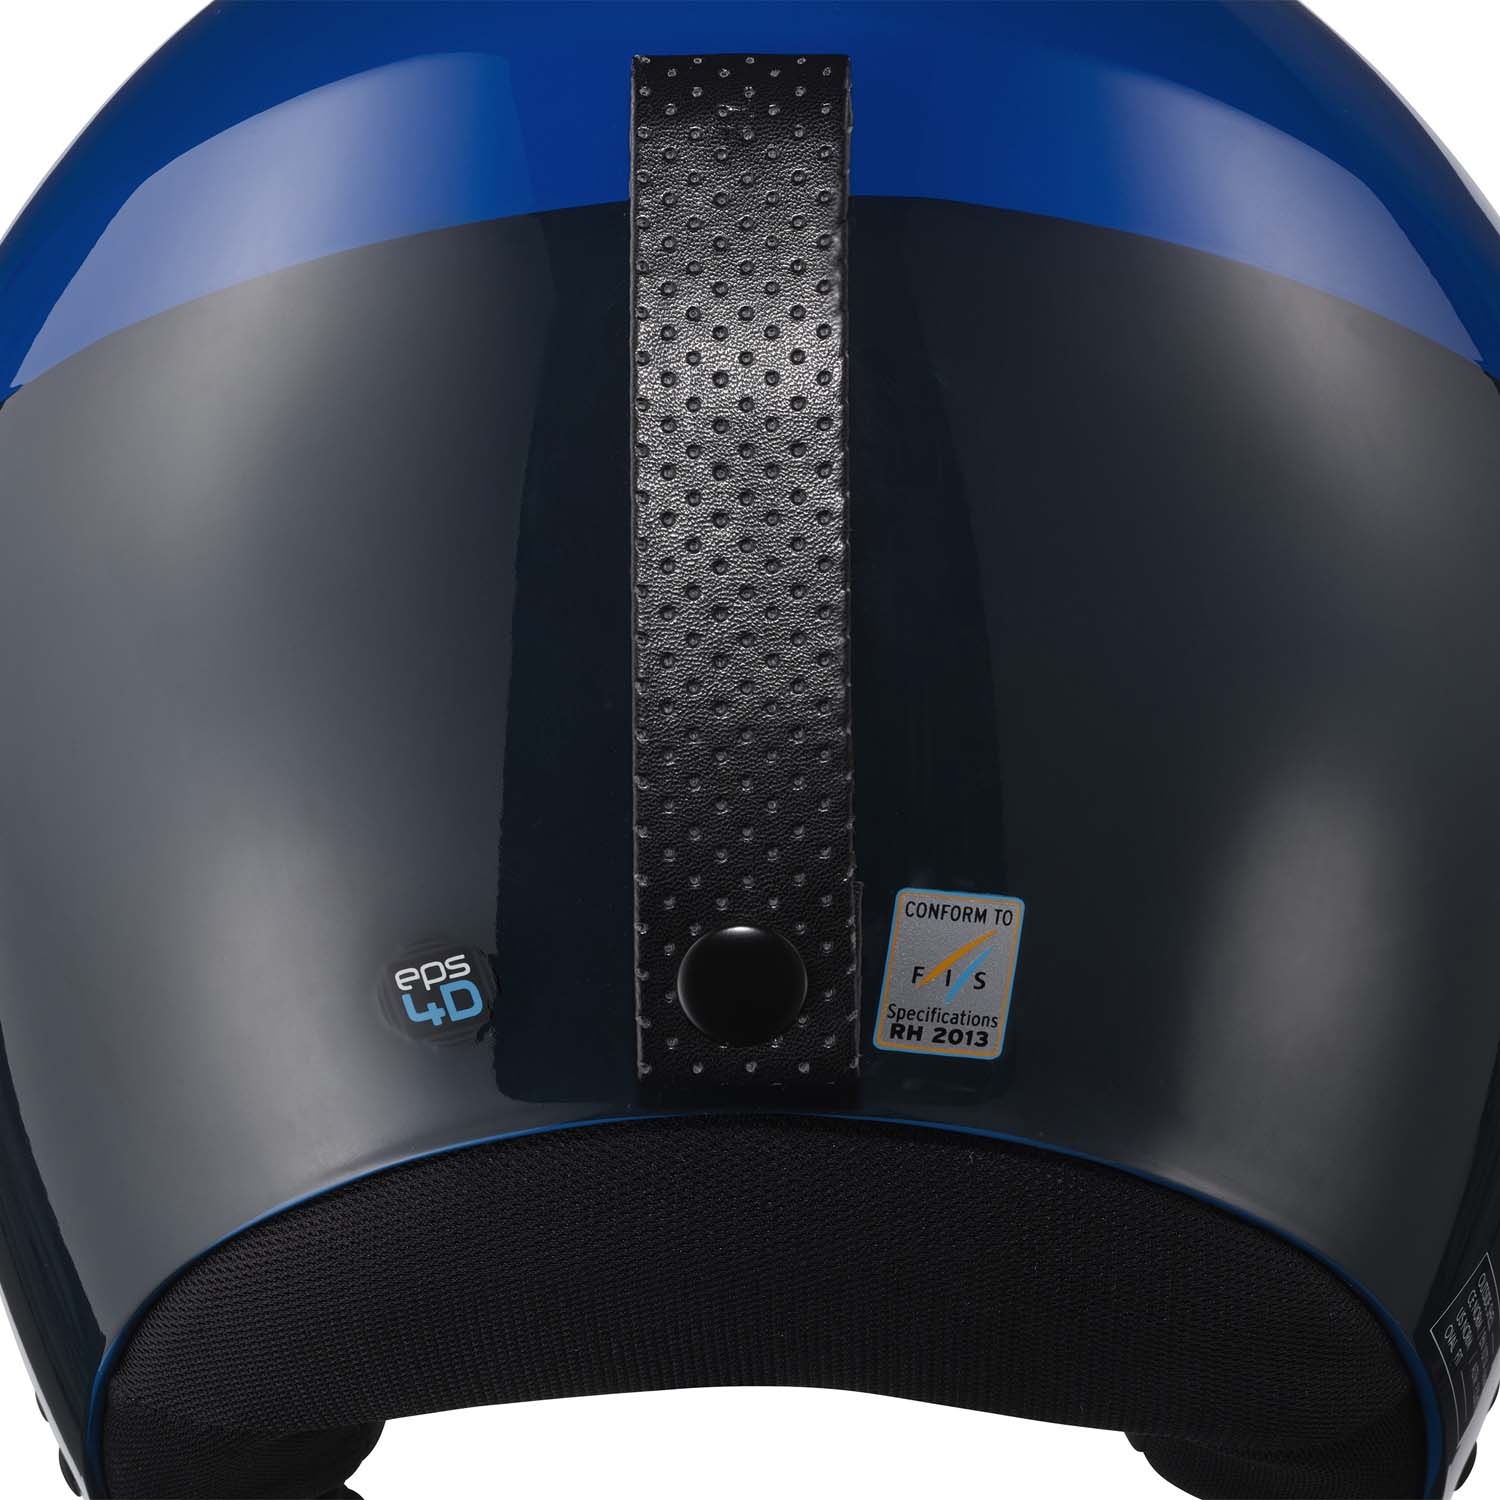 Salomon S/Race Fis Injected Helmet Blue 2022